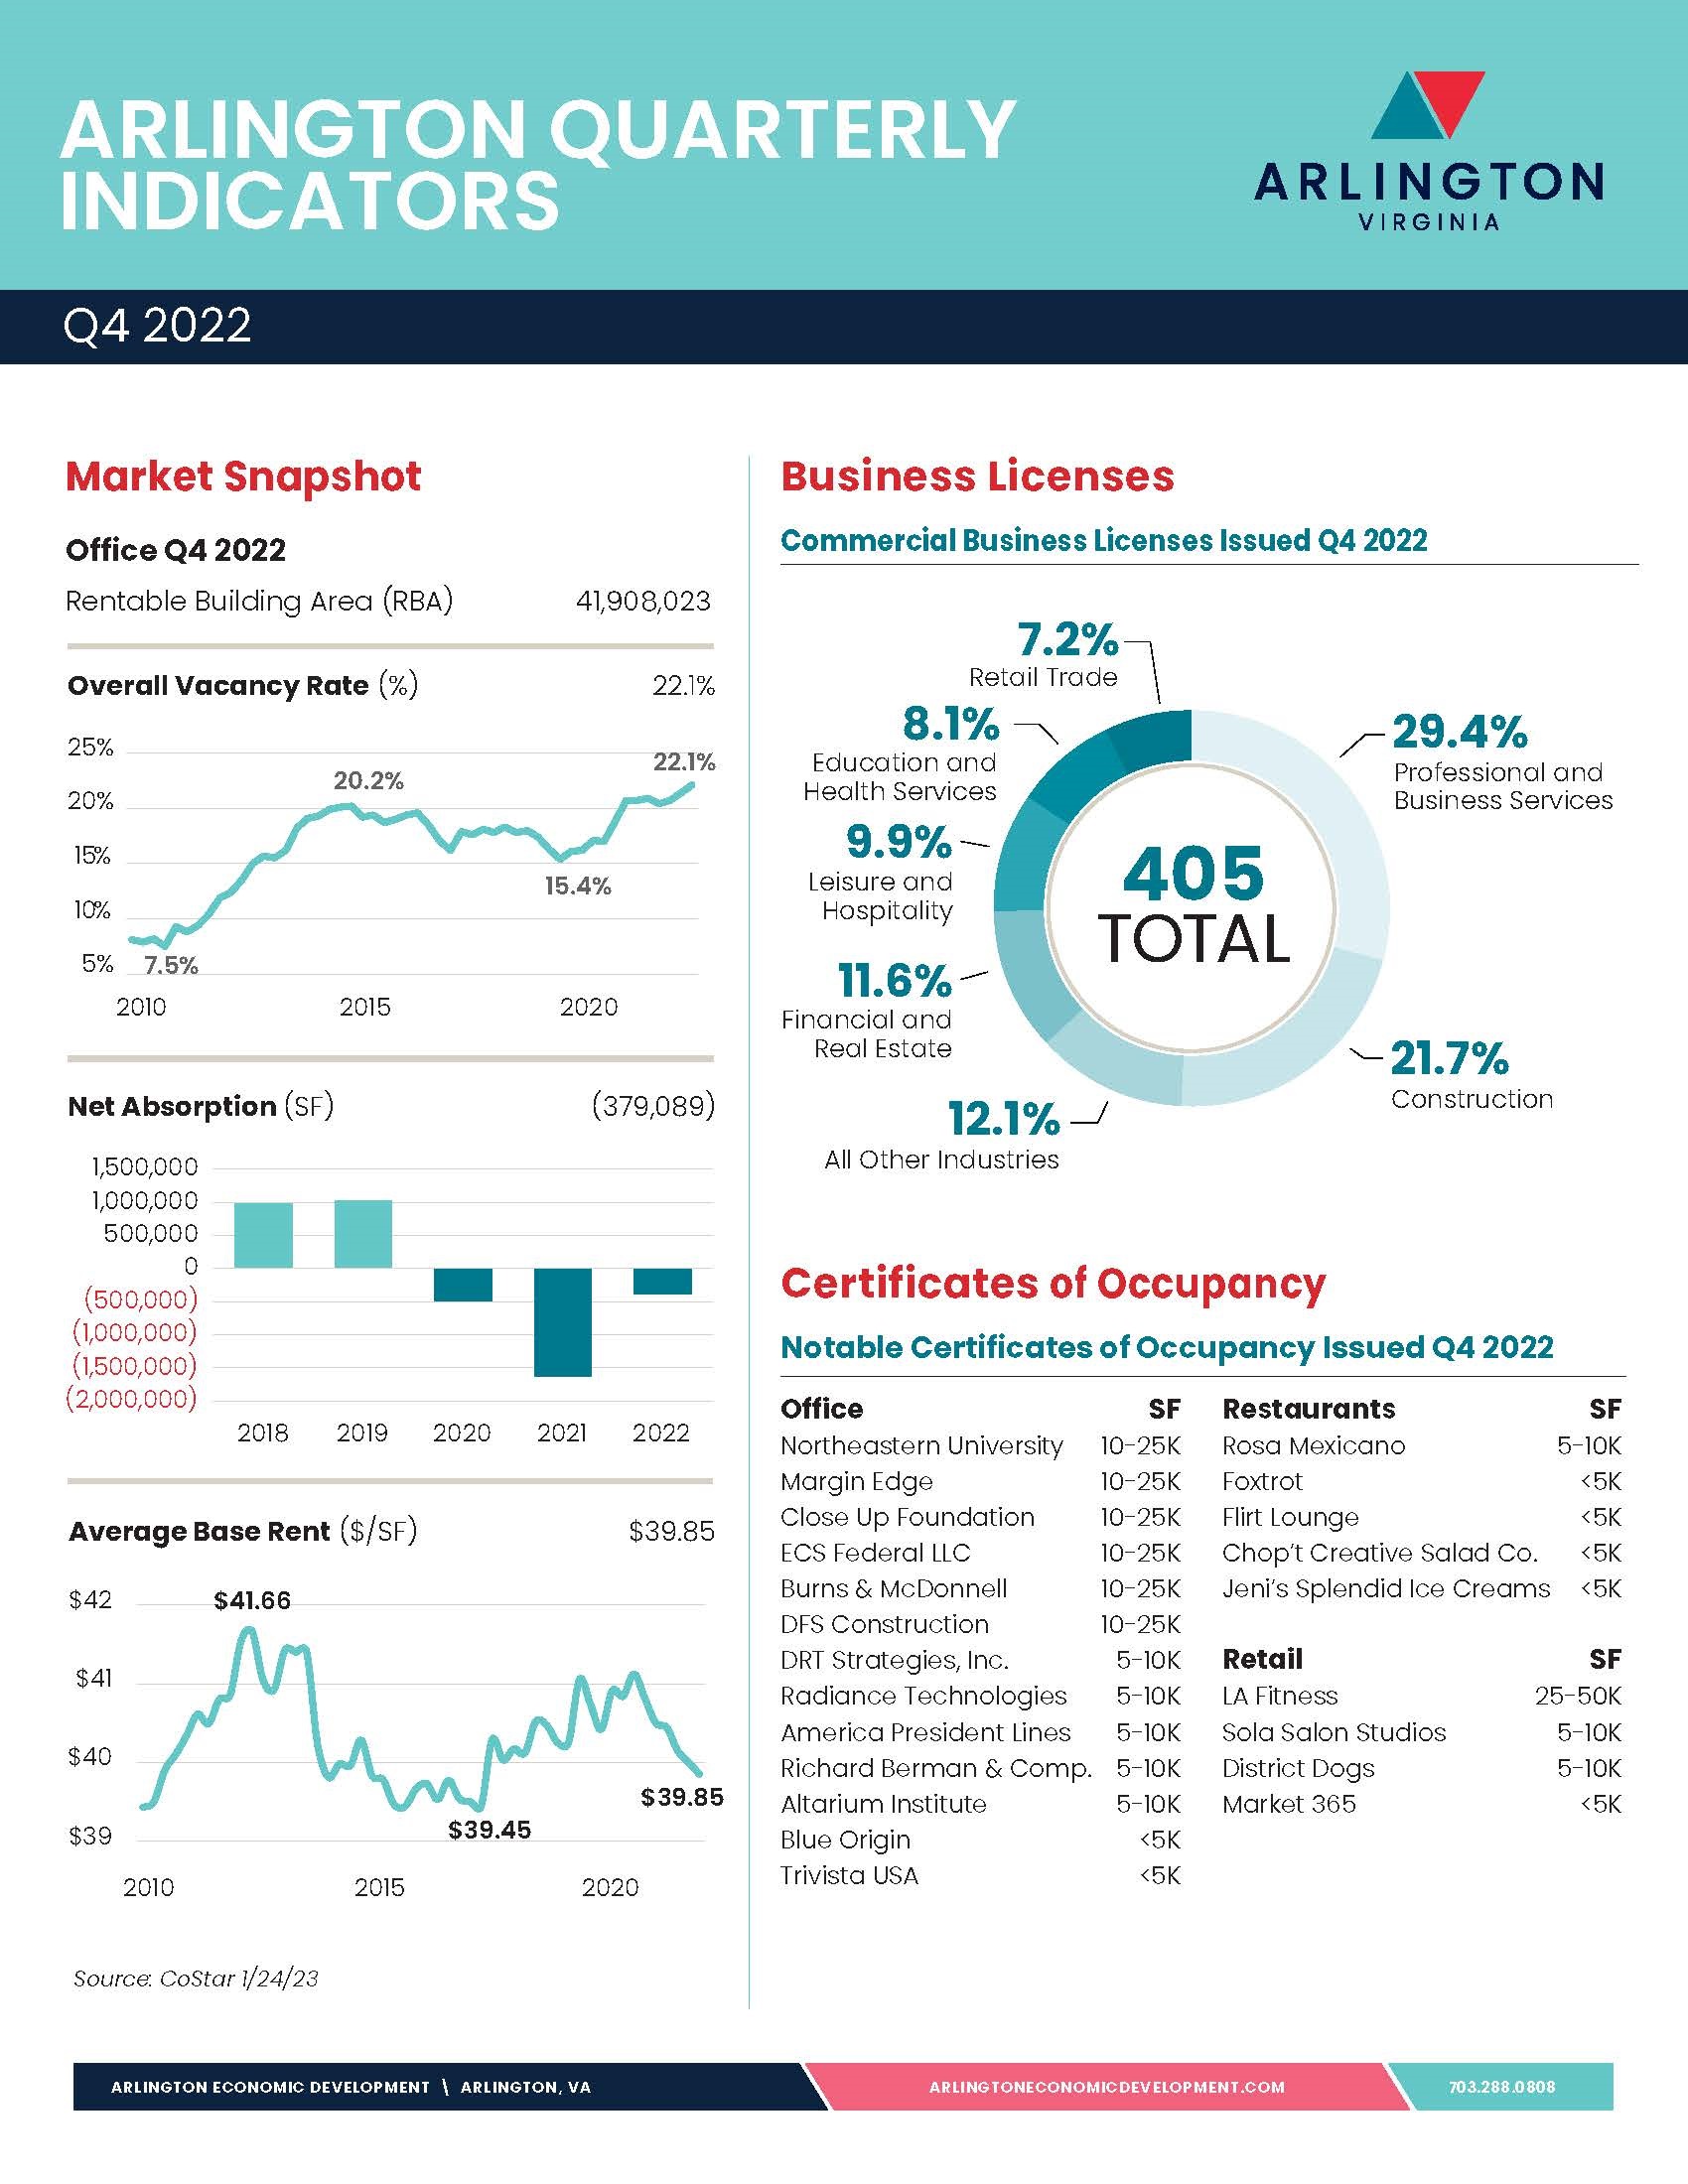 Arlington Quarterly Indicators Q4 2022_Page_1.jpg